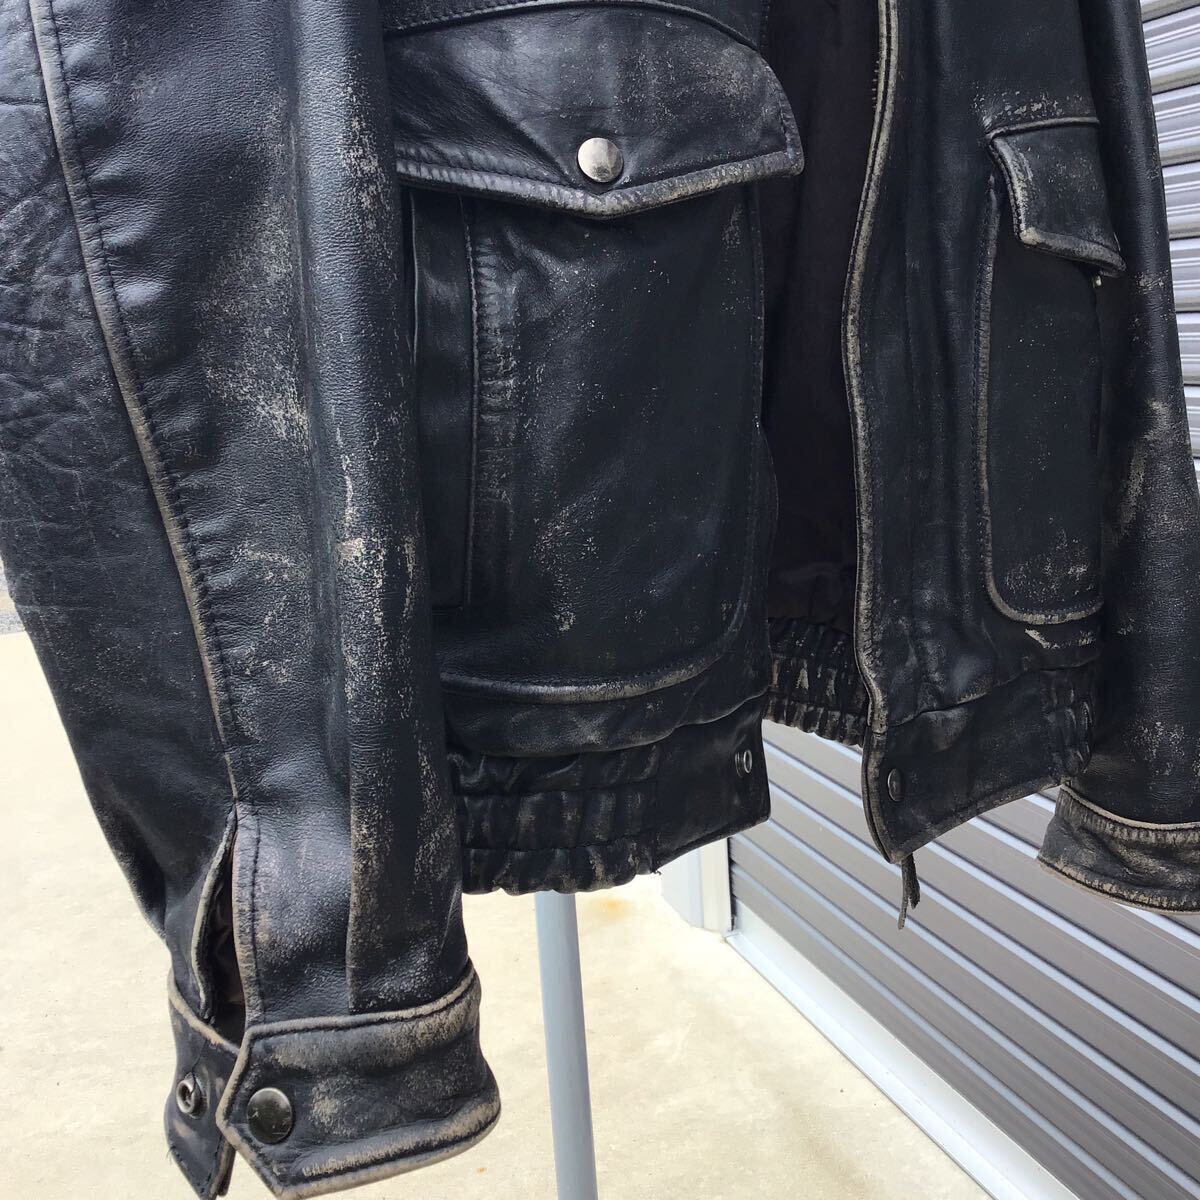 yare feeling eminent! Harley Davidson original leather jacket original leather Rider's old clothes leather jacket Vintage A-2 black size 42